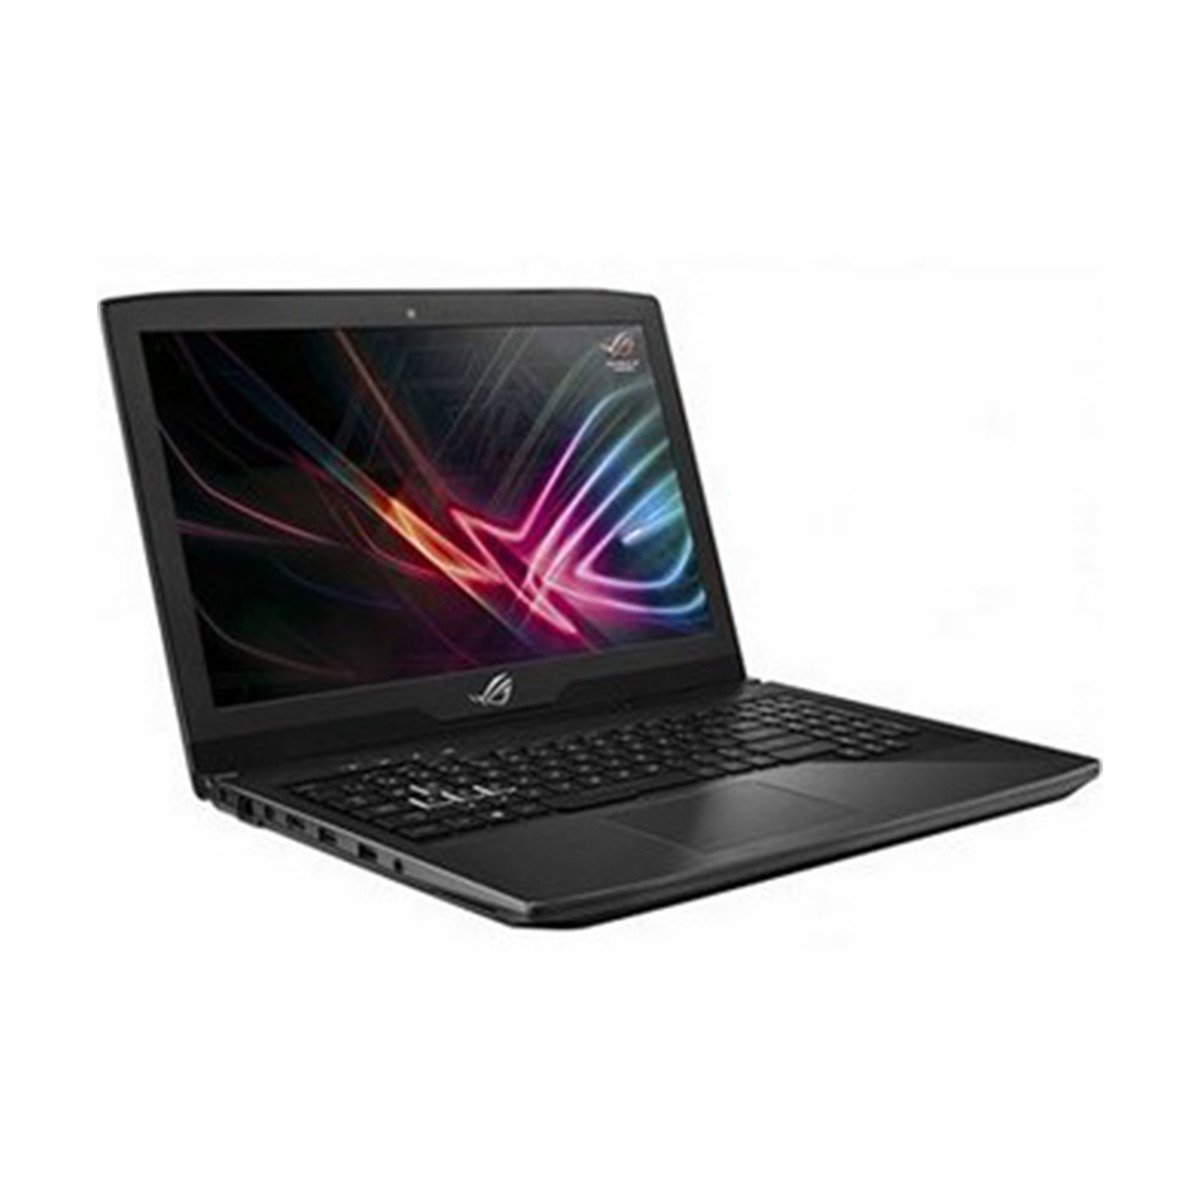 Asus Gaming Laptop Rog Strix Hero Edition GL503GE-EN095T Core i7 Black